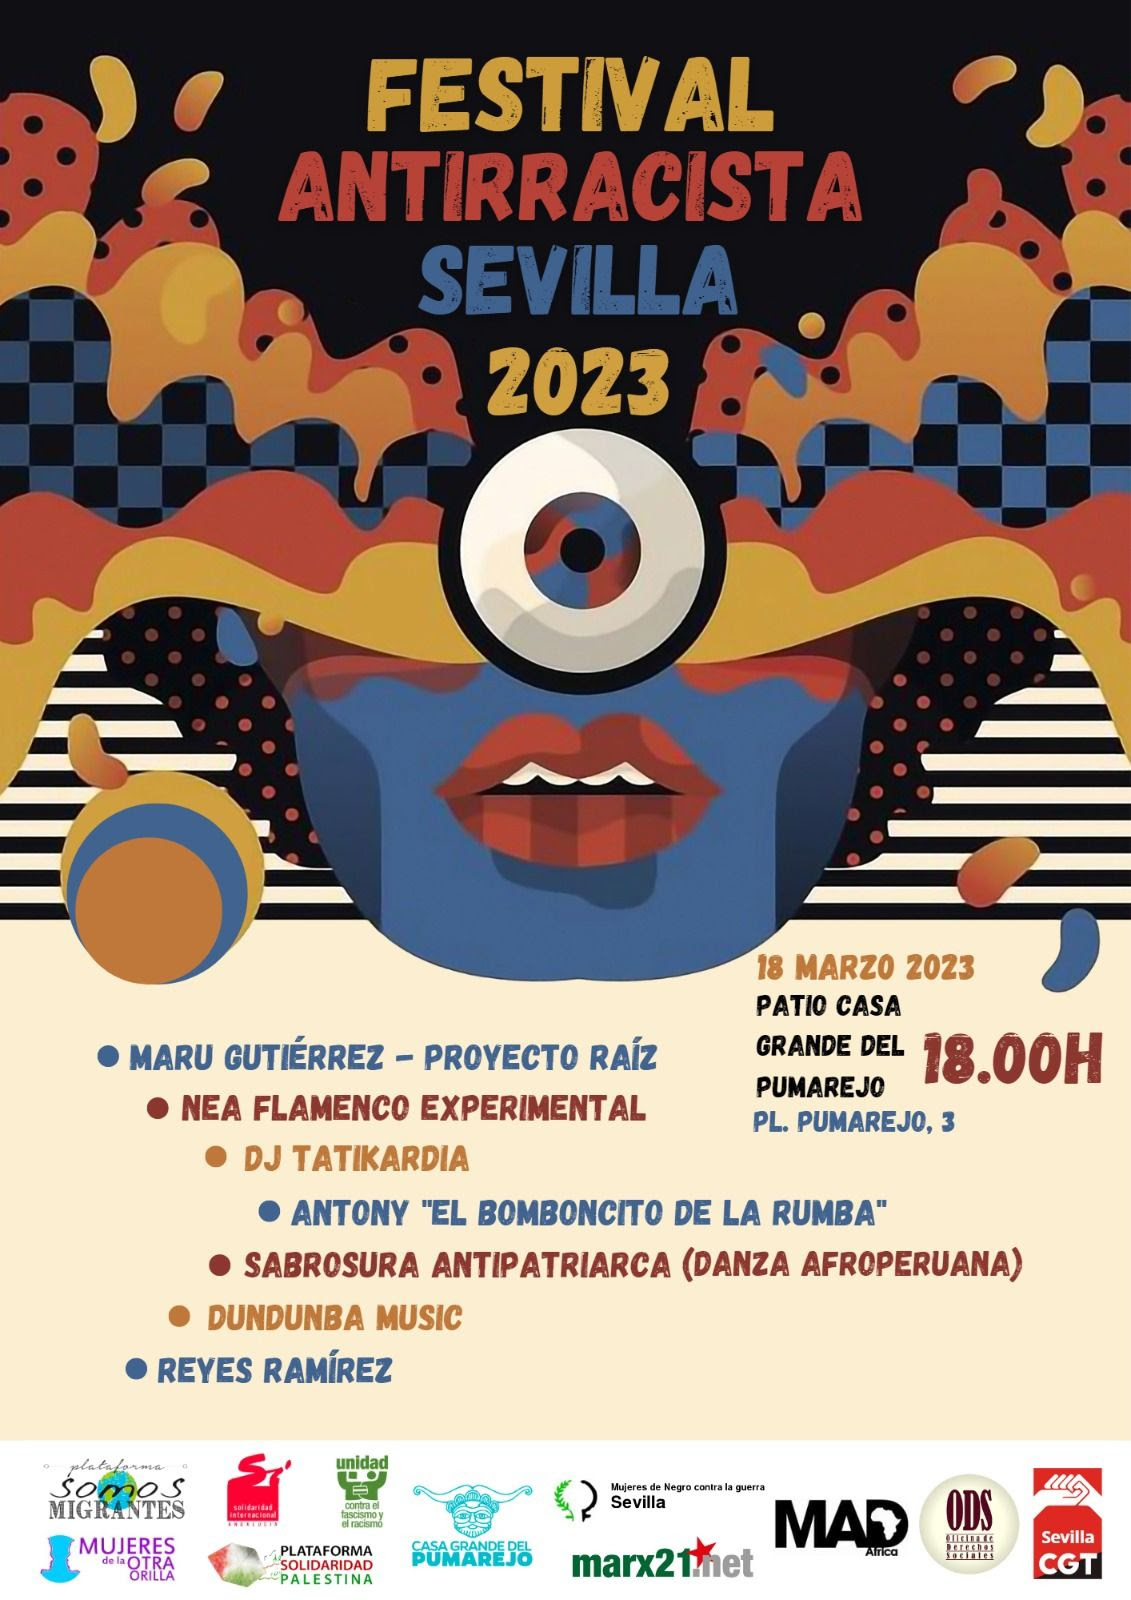 Sevilla| Festival antirracista 2023